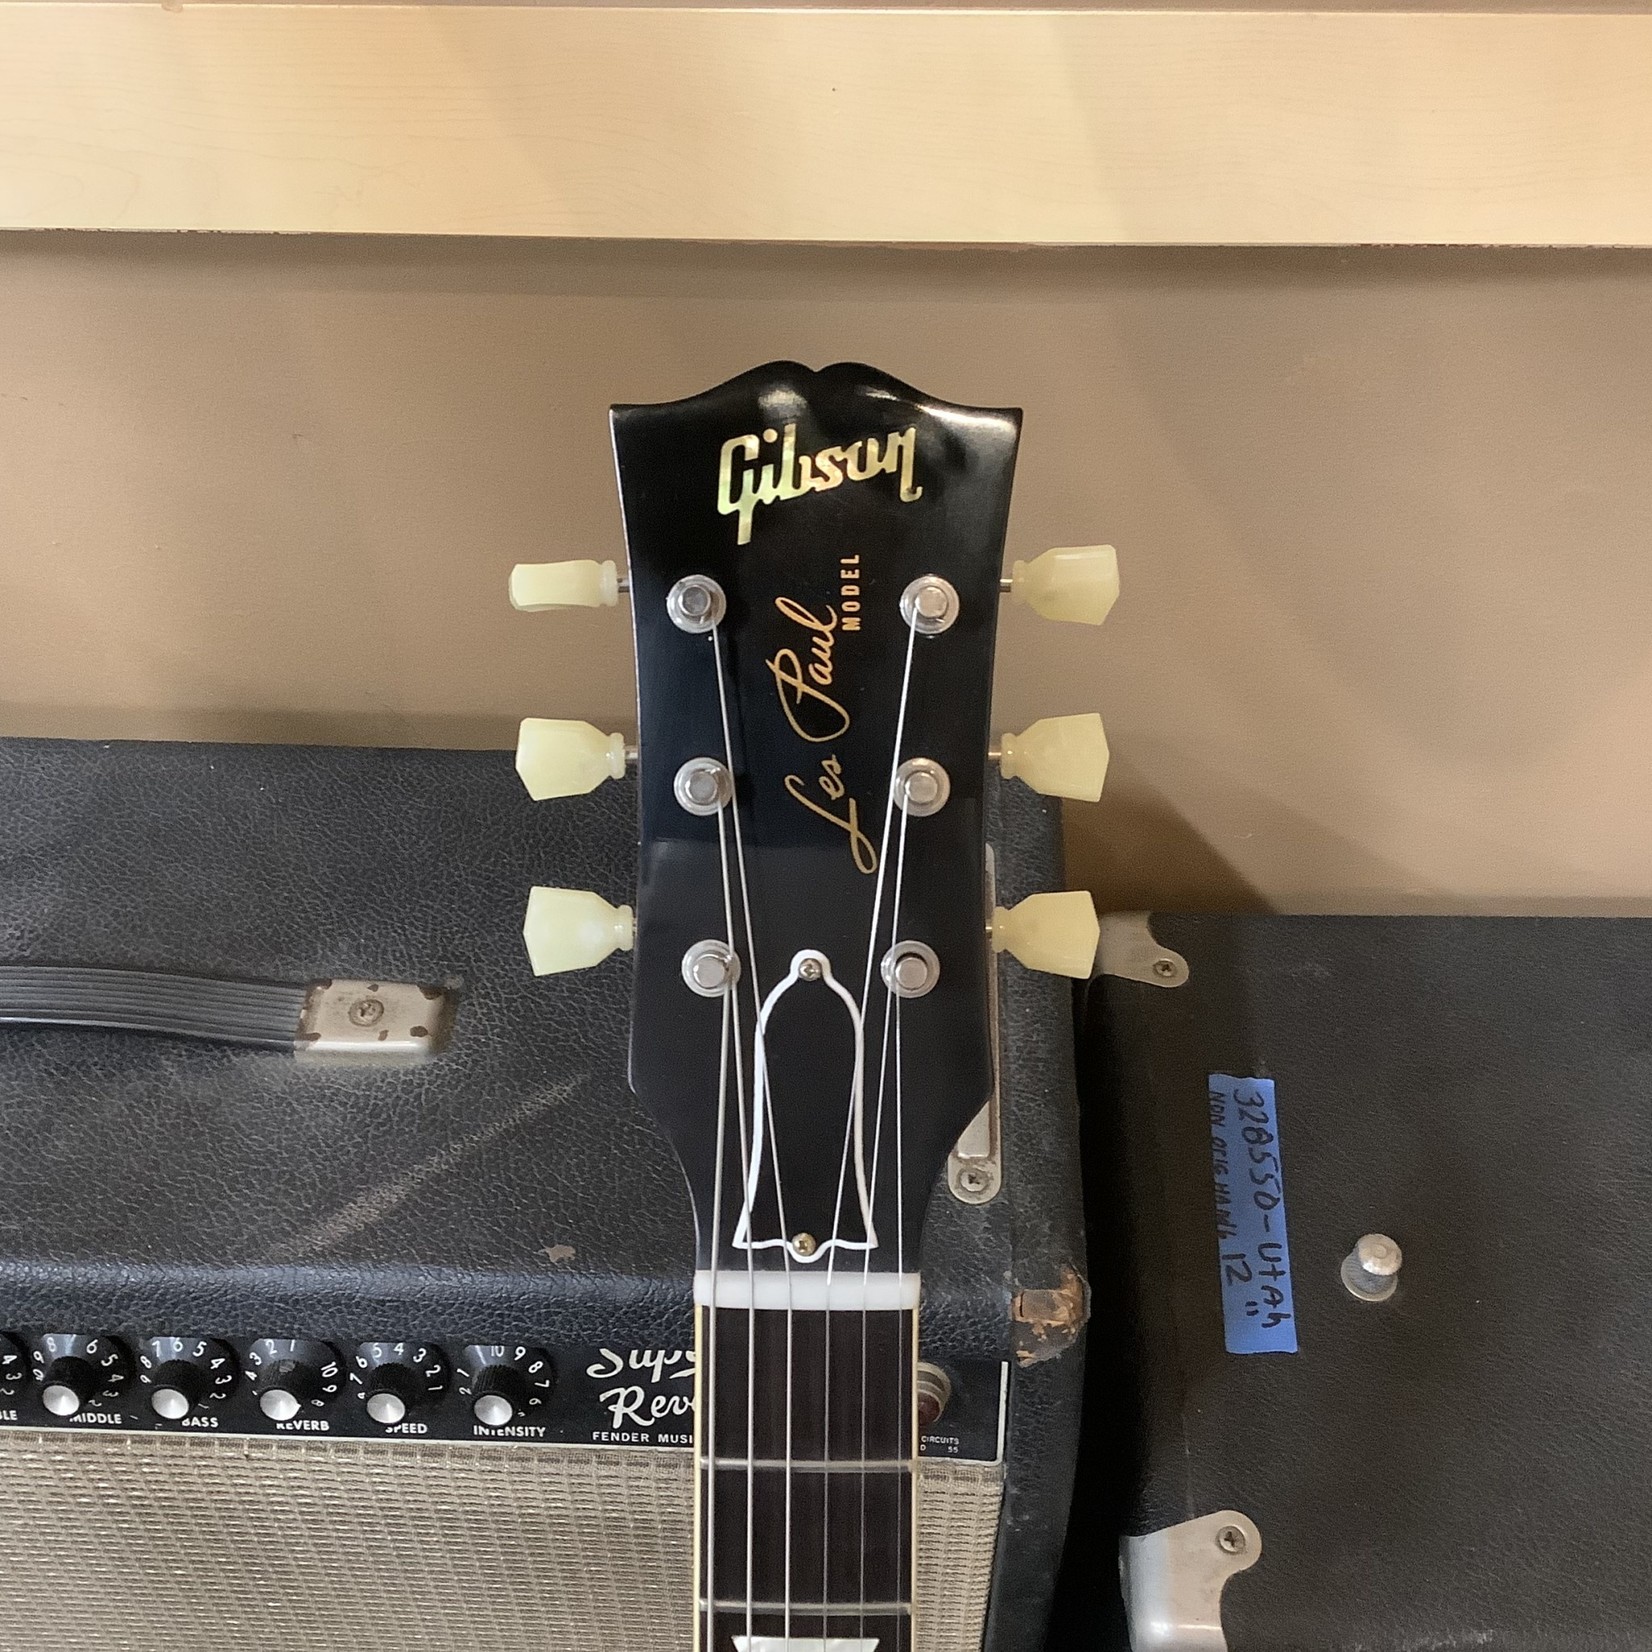 Gibson 2017 Gibson Les Paul Standard, True Historic, Aged, Tom Murphy Painted, Limited Run, Sunburst